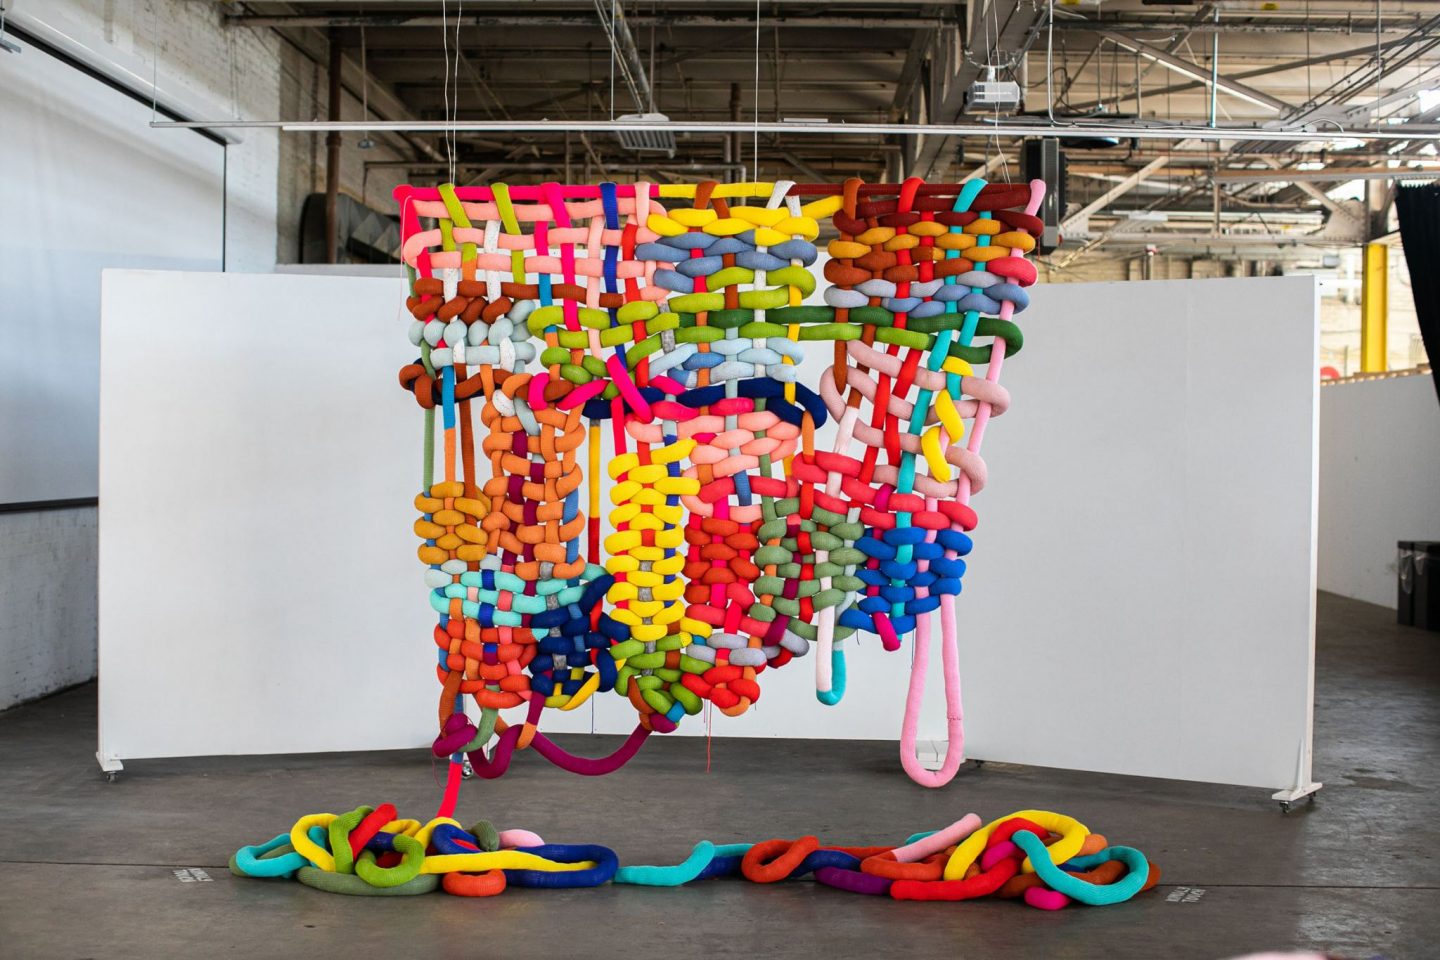 Katrina Sánchez Standfield weaving installation